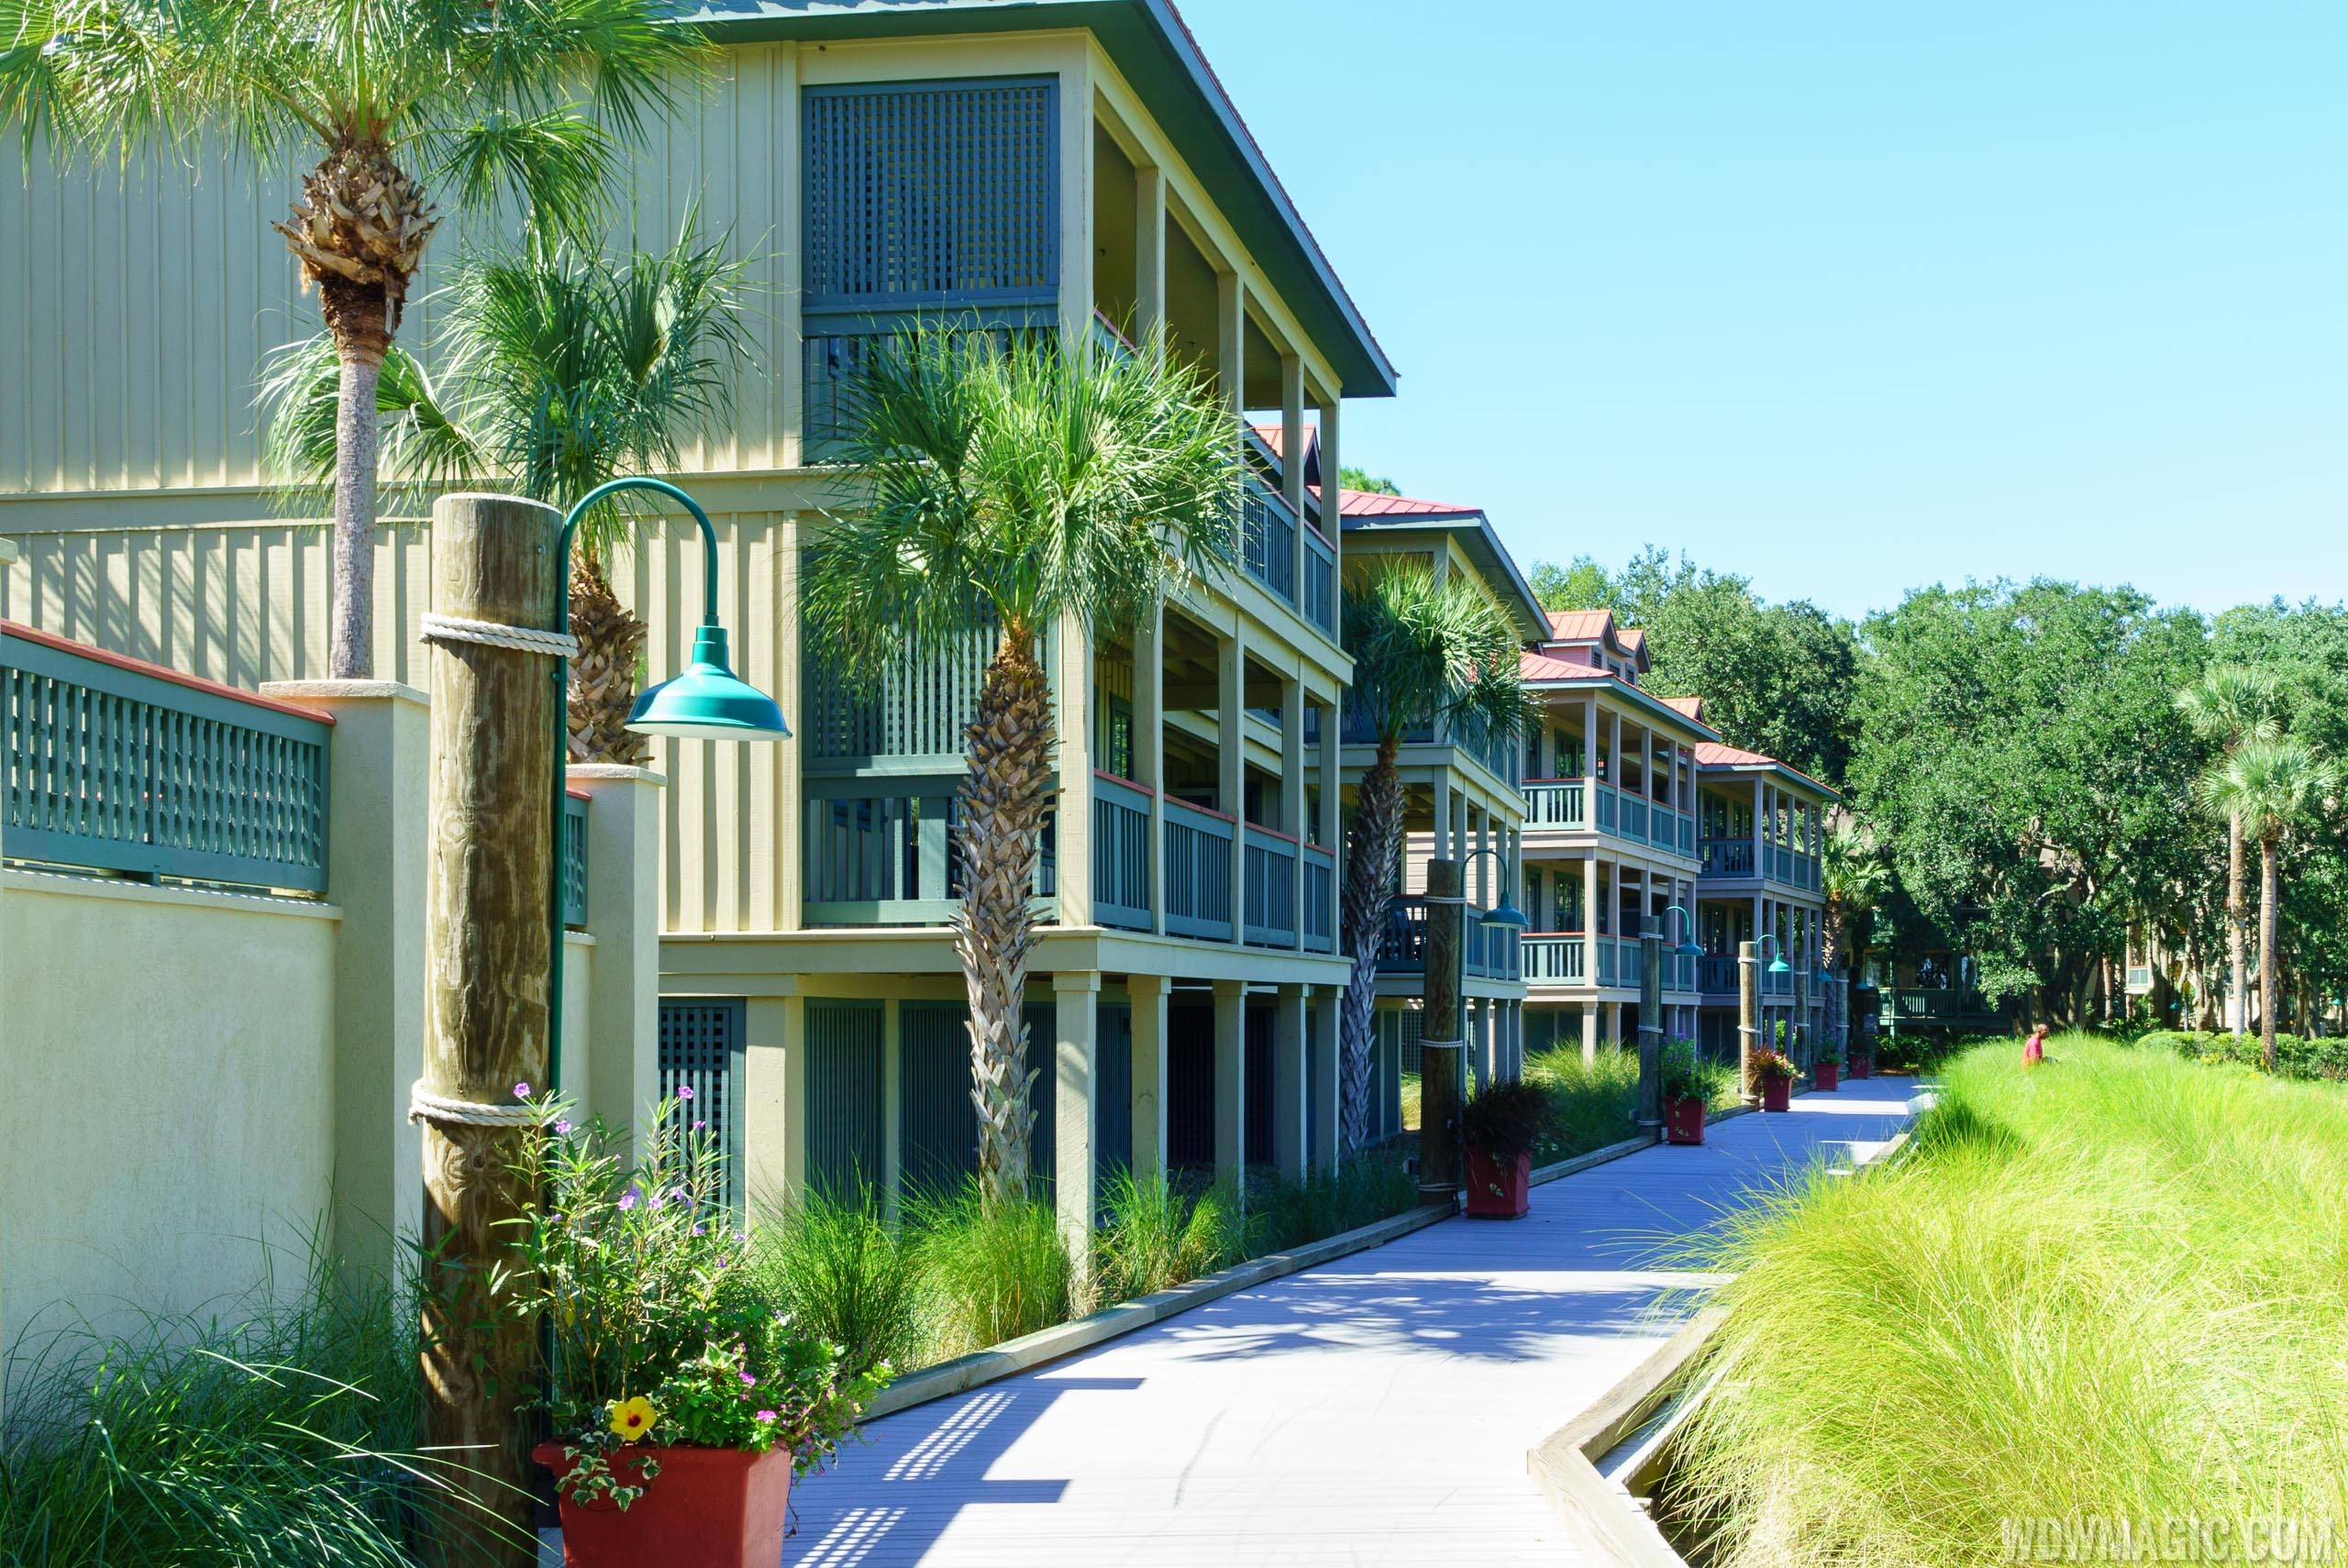 Disney's Hilton Head Island Resort - Guest room buildings